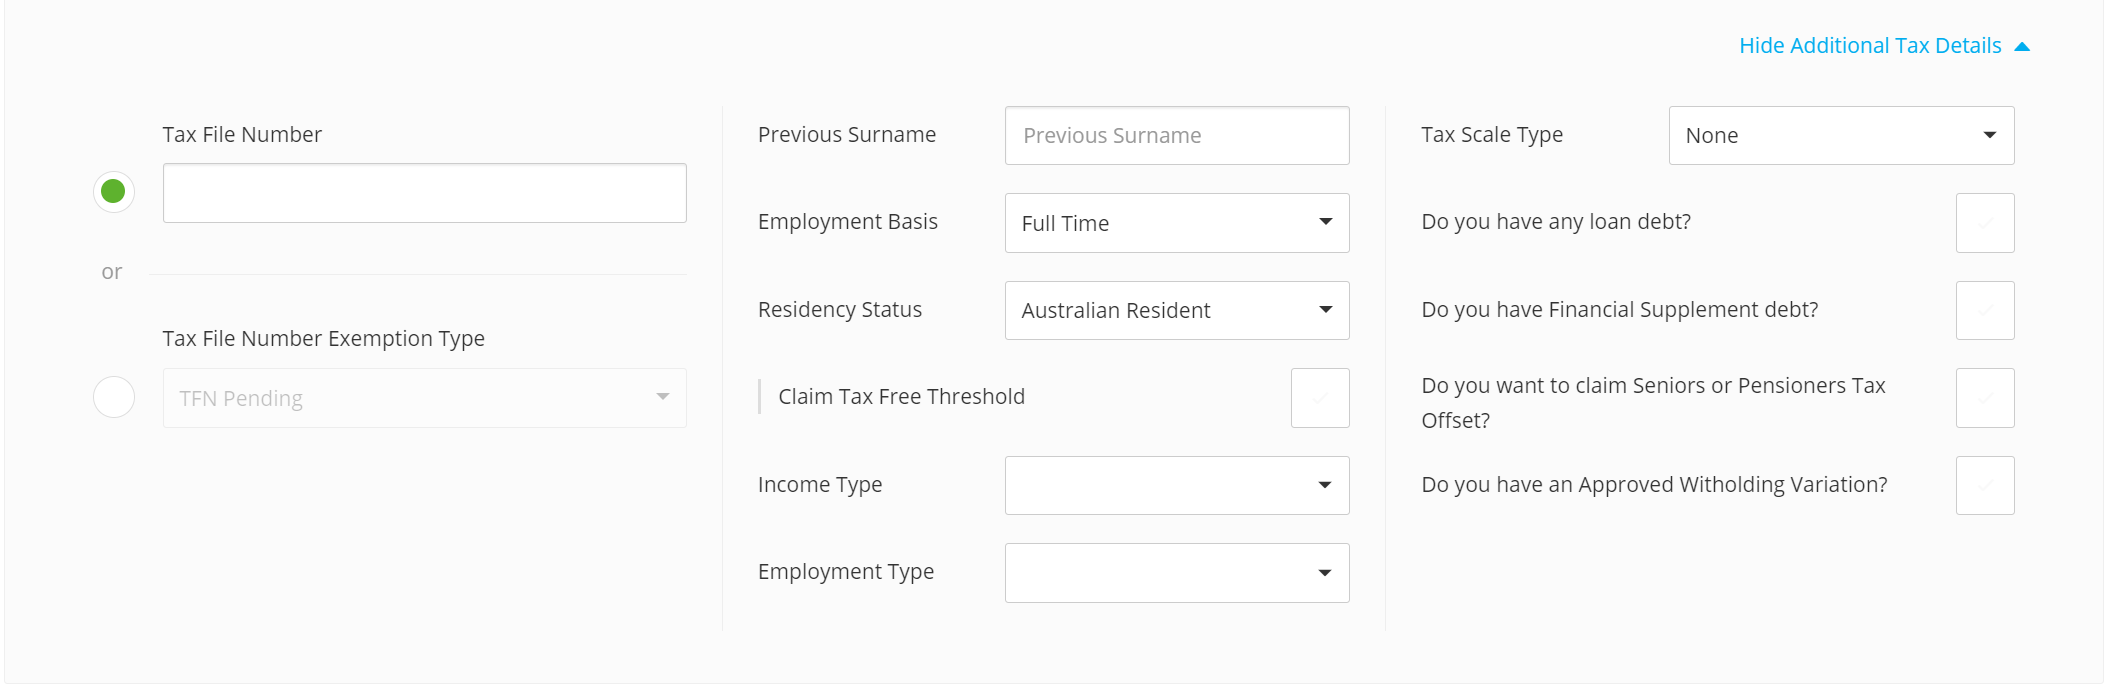 Additional_Tax_Details_-_AU.png